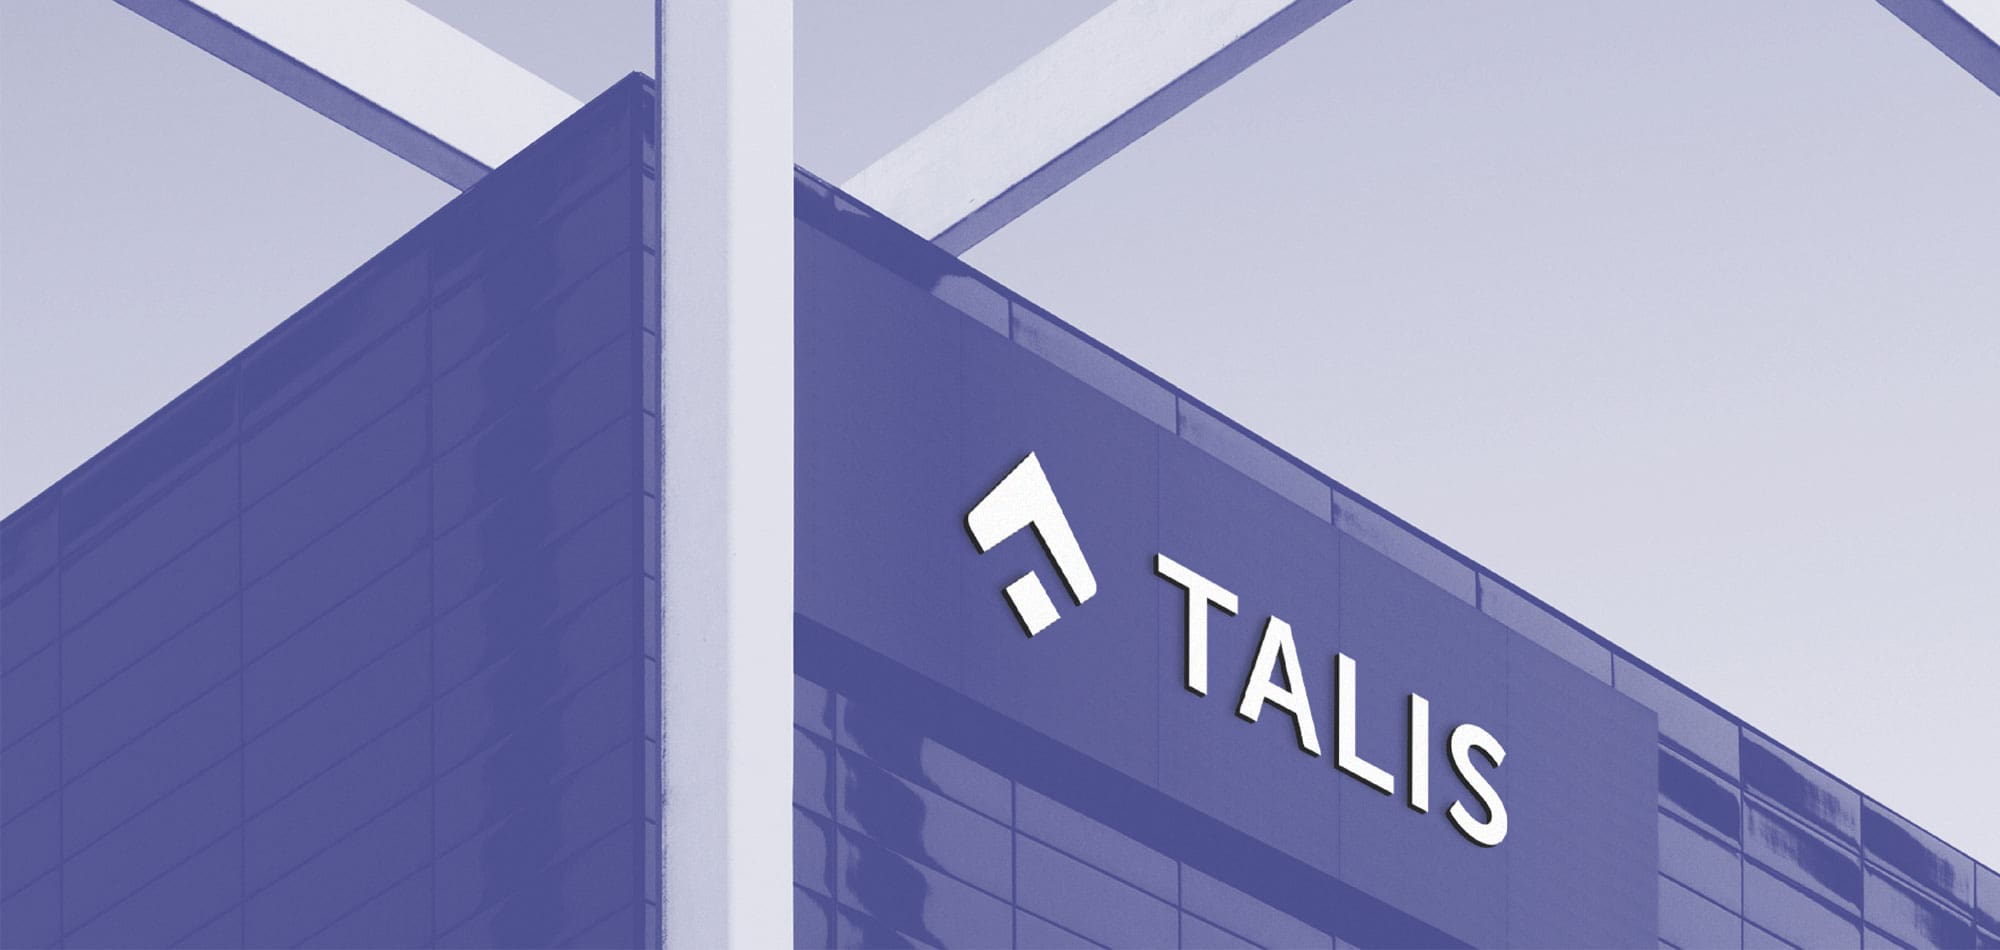 Talis Biomedical branding on building